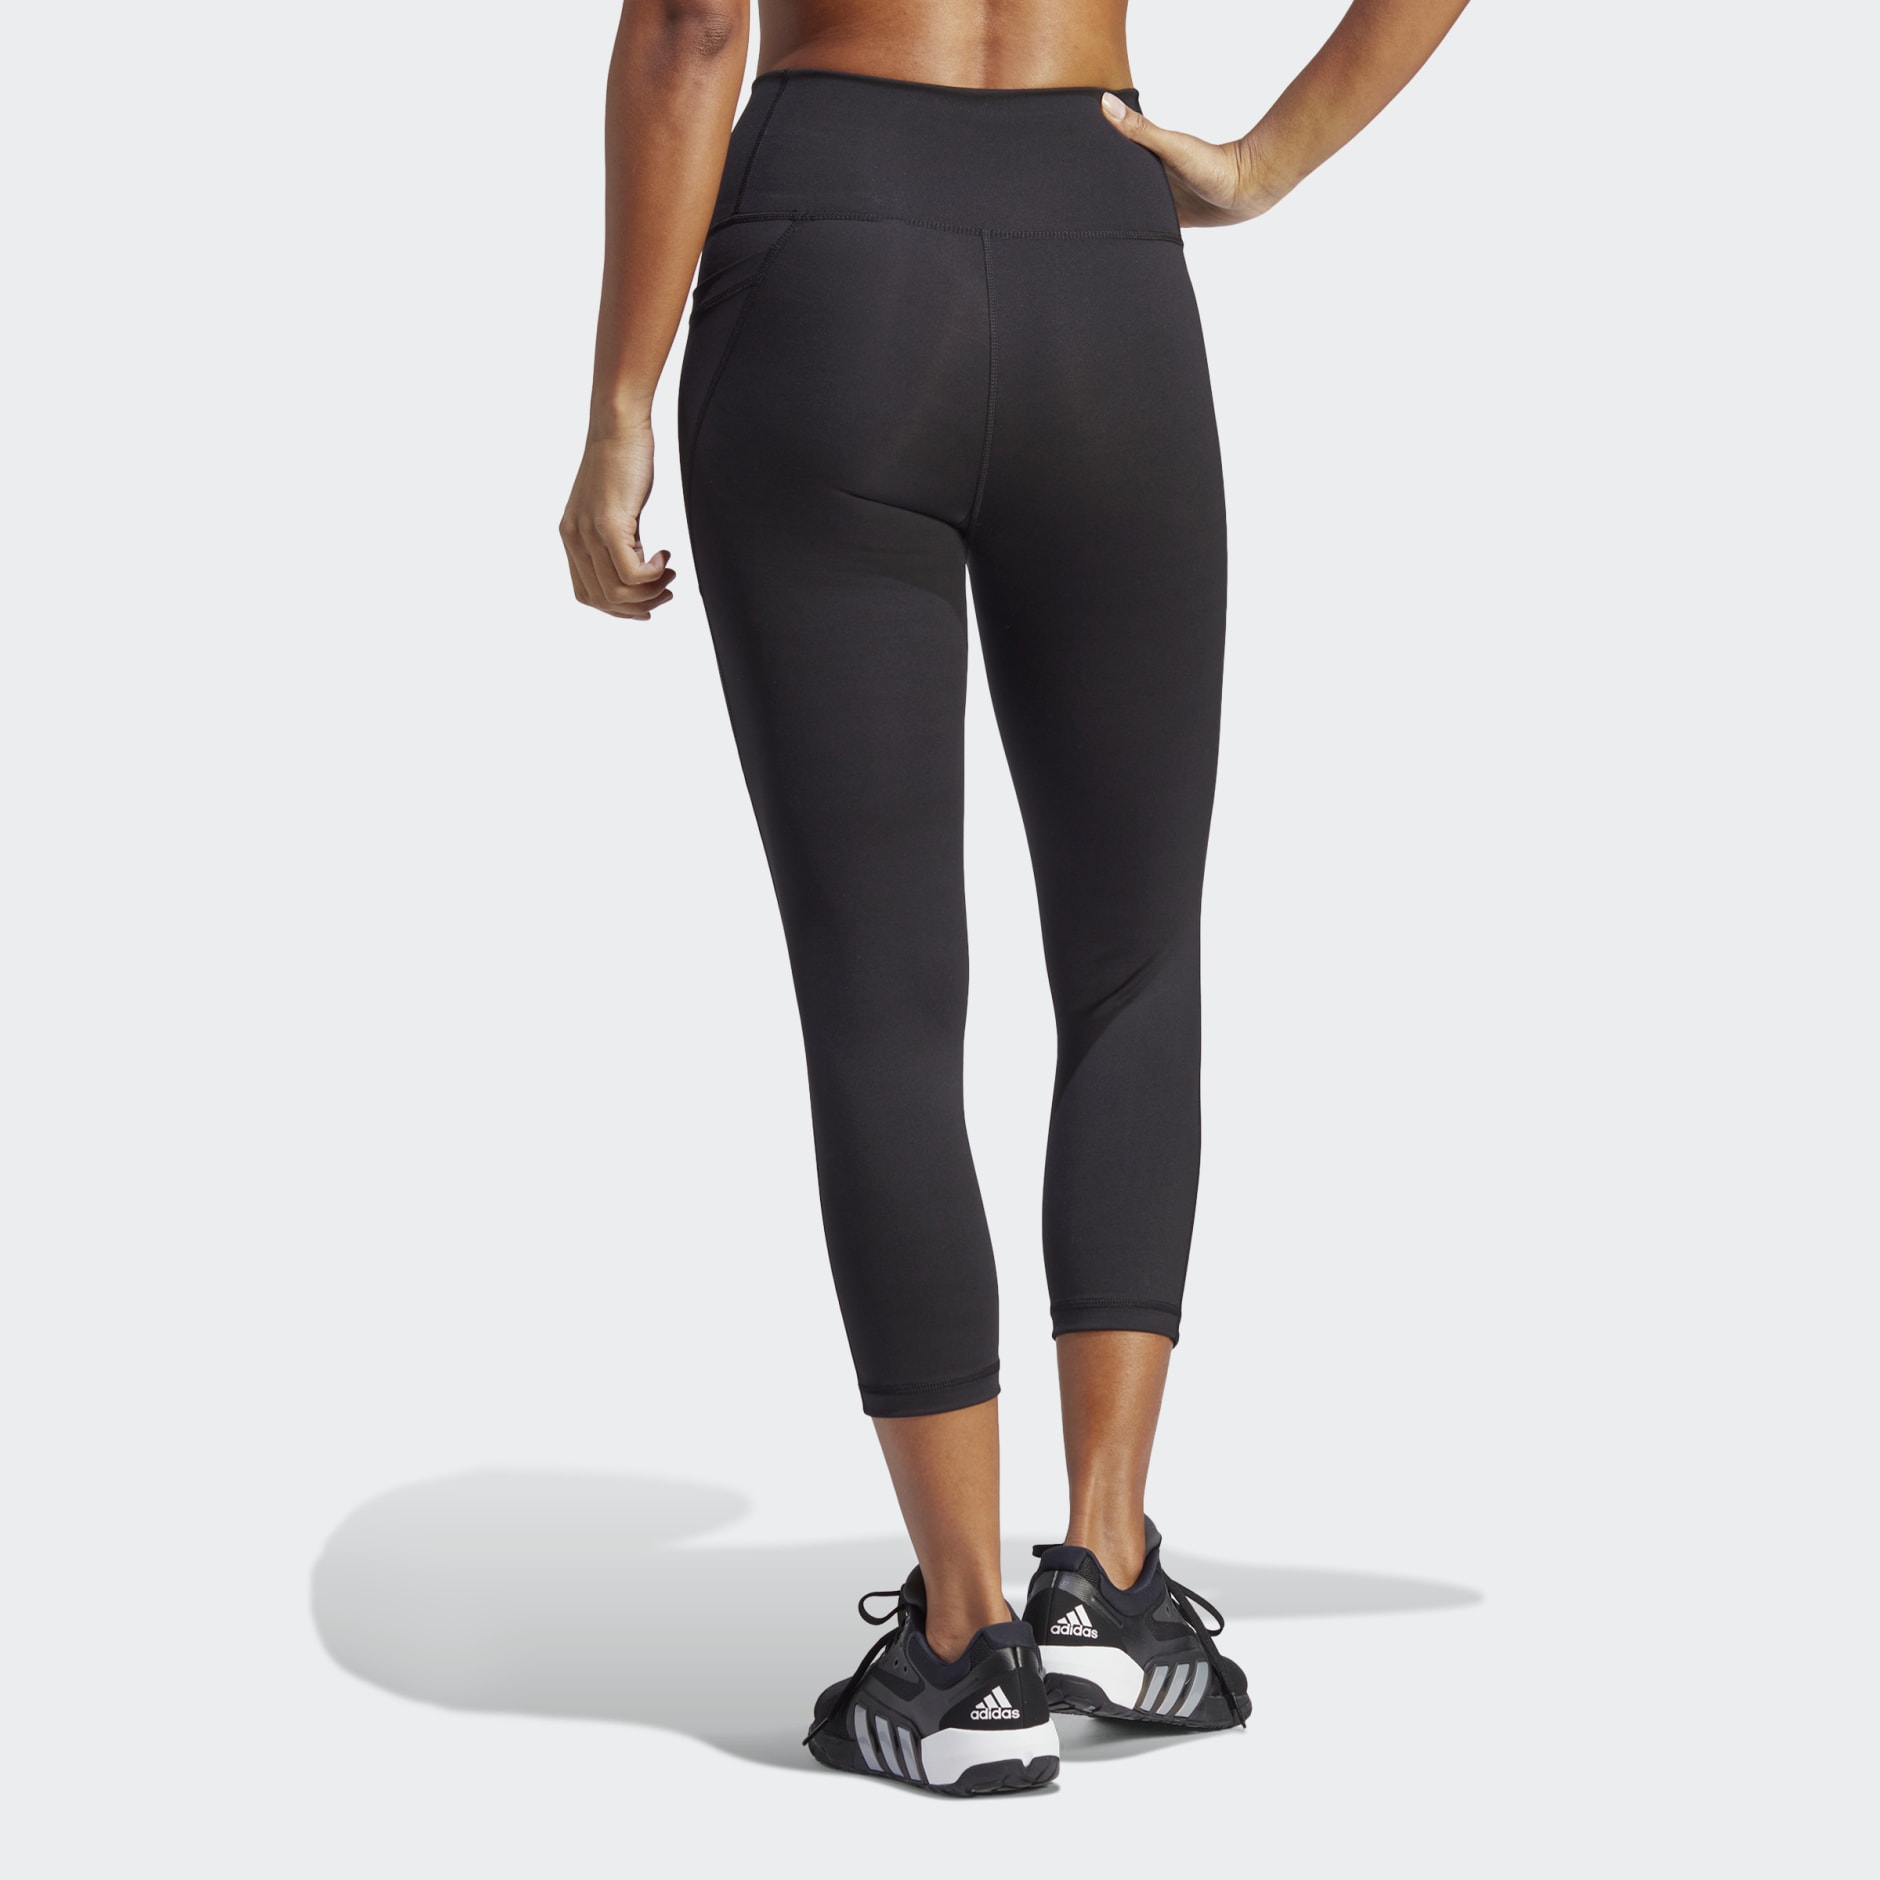 adidas | Pants & Jumpsuits | Adidas Climalite High Waist Leggings 3 Stripe  Xl Charcoal Grey Black Workout Gym | Poshmark